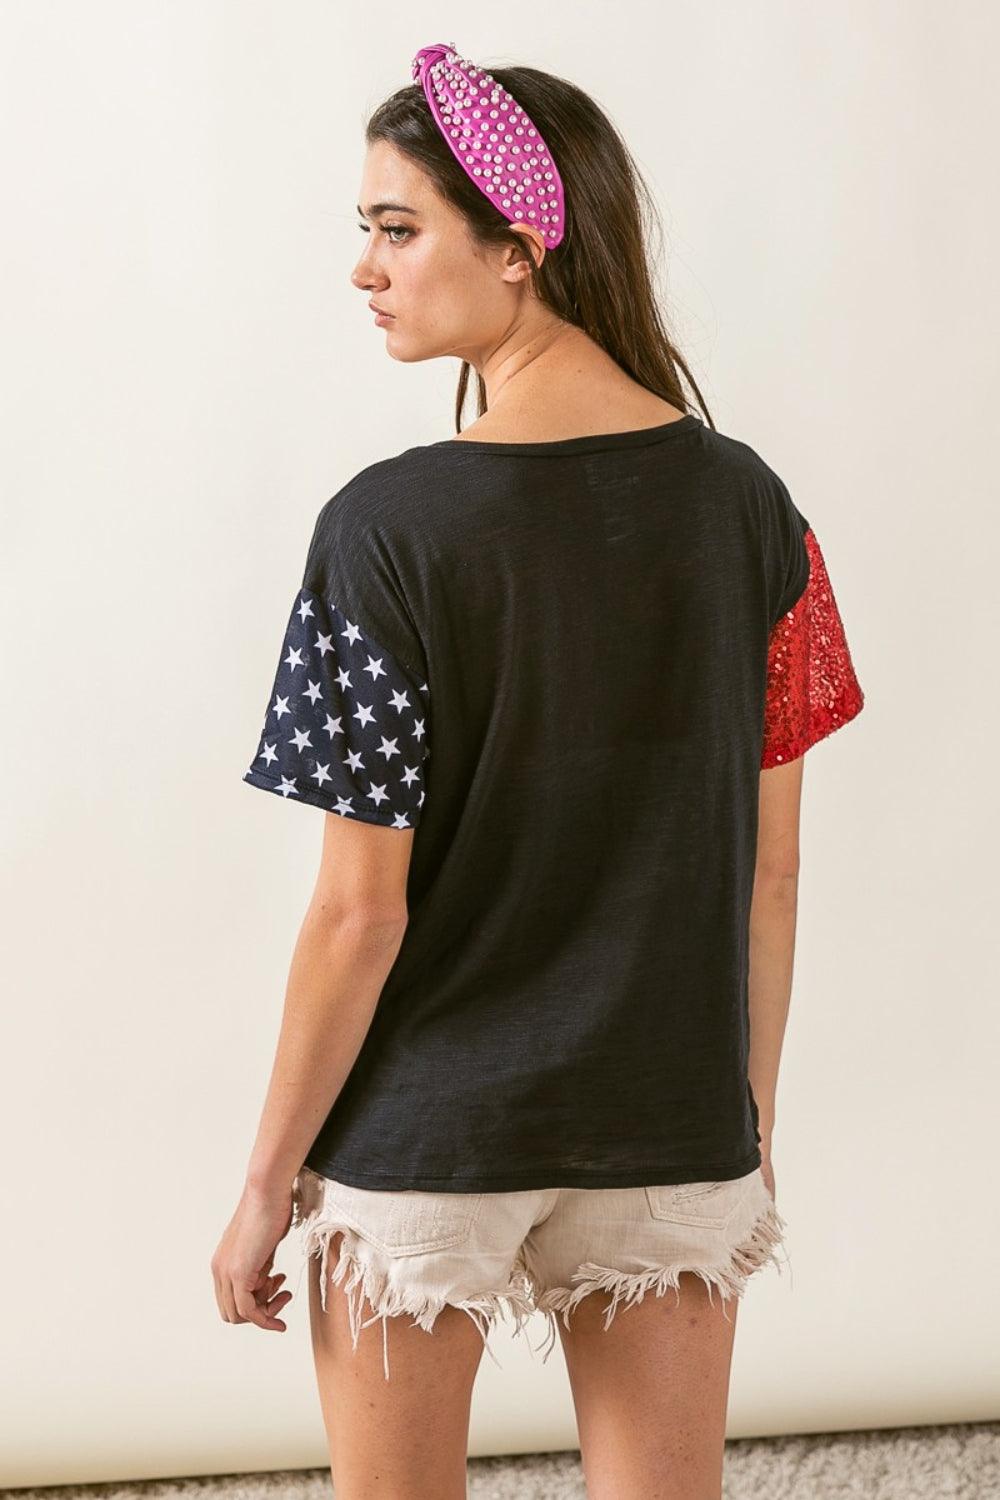 BiBi USA Graphic Short Sleeve Distressed T-Shirt - AMIClubwear